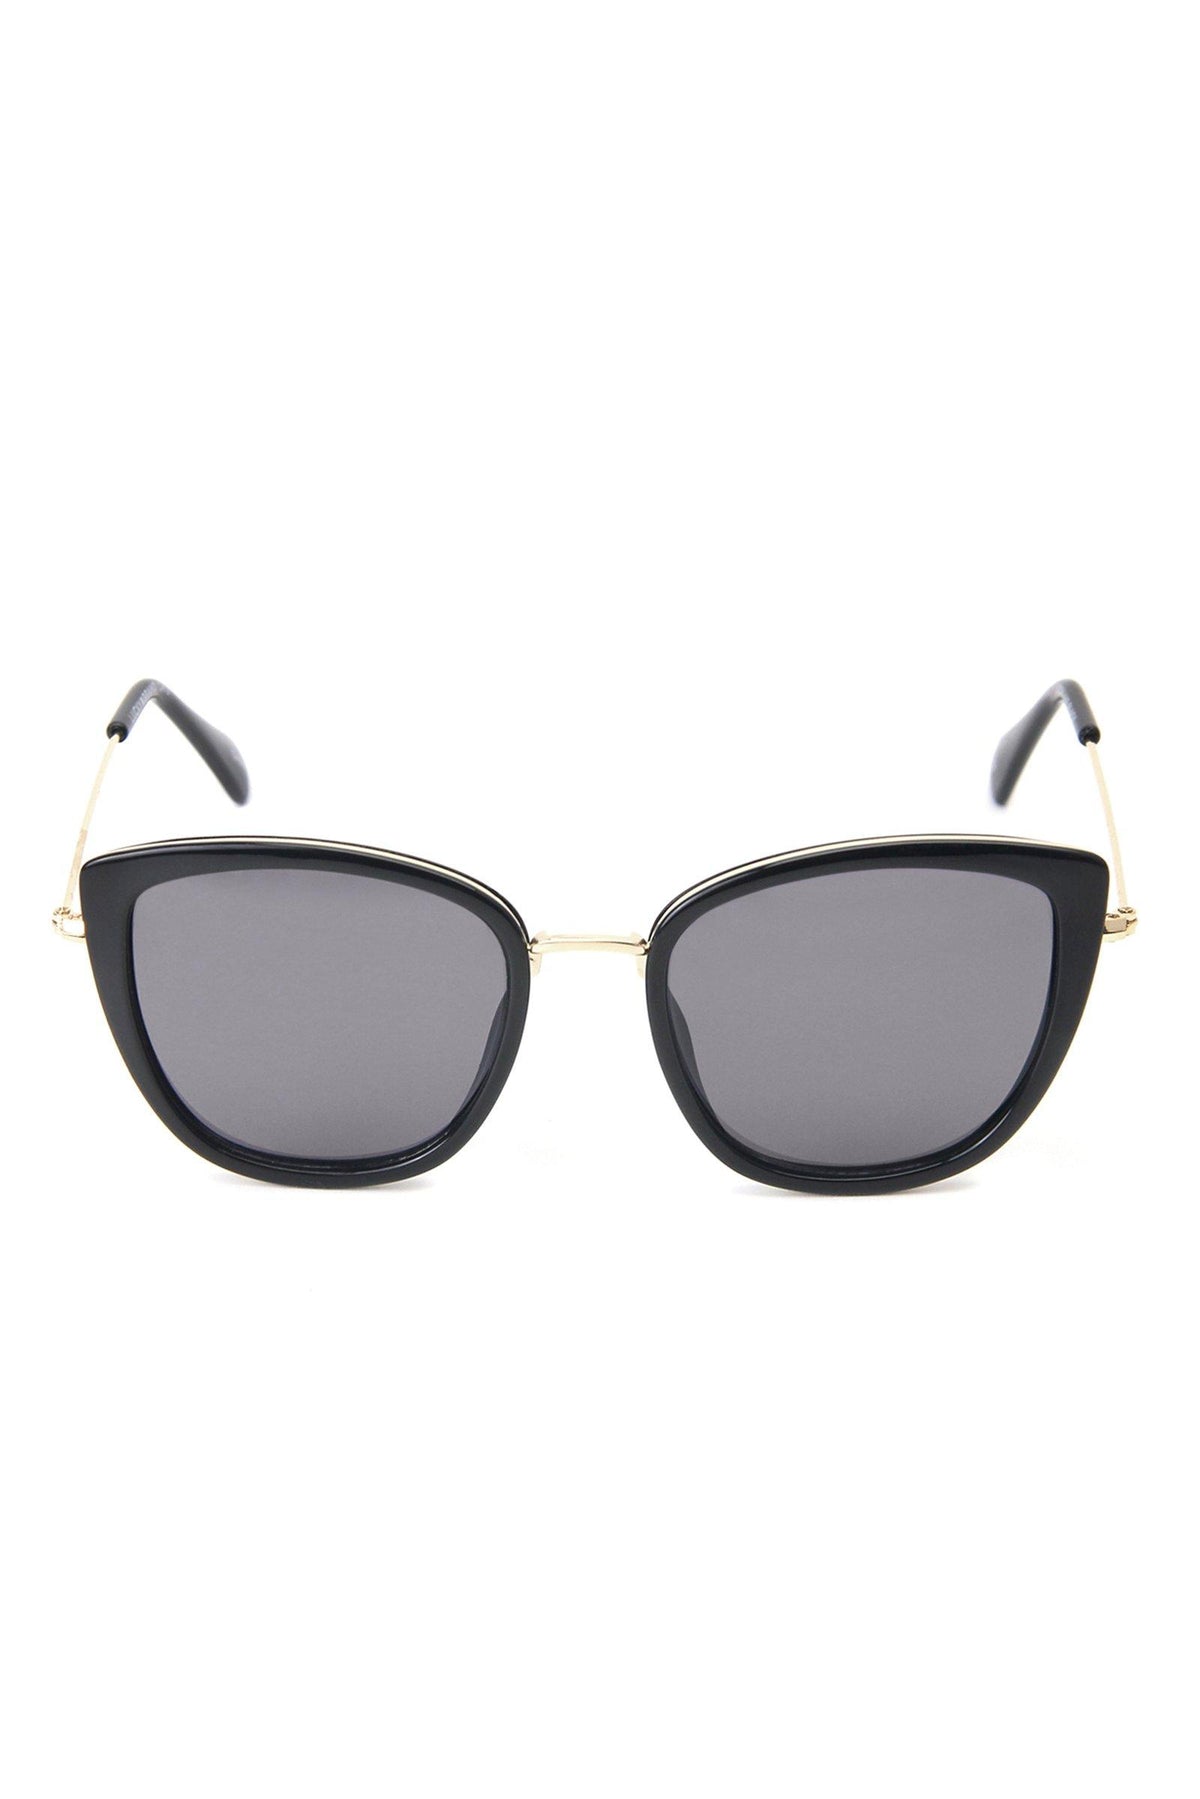 Lucky Brand Trinity Sunglasses Black